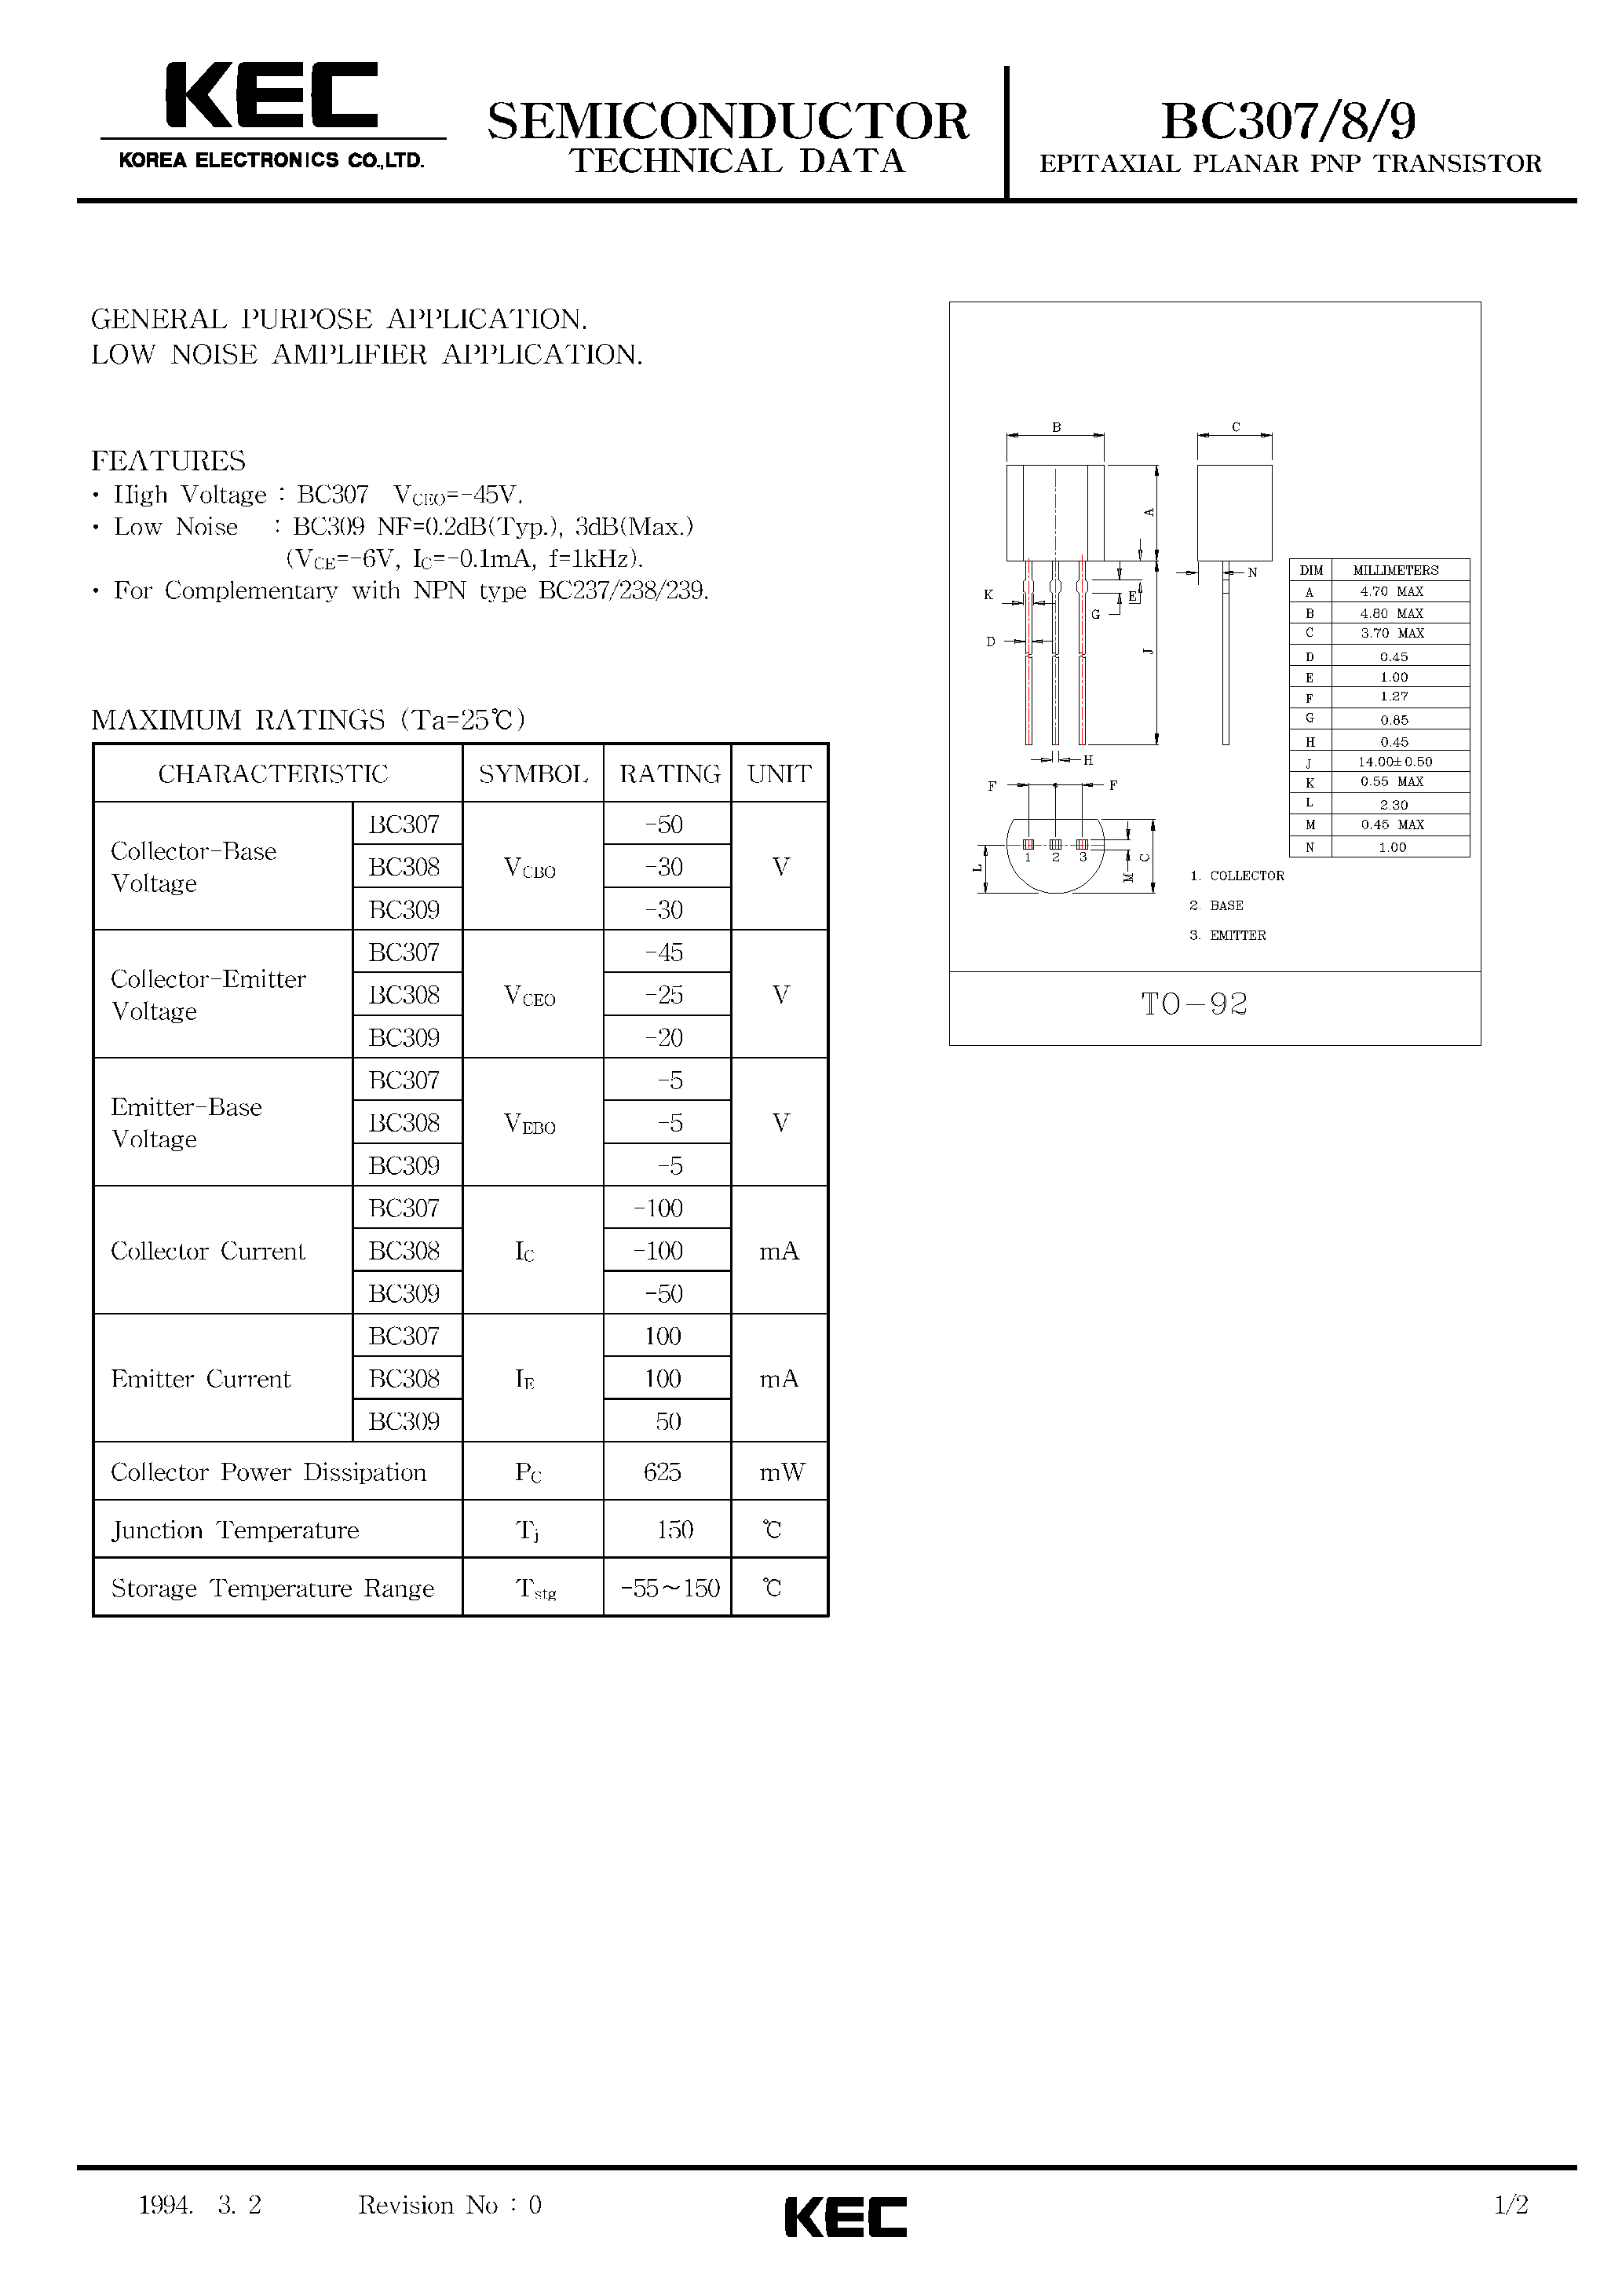 Datasheet BC309 - PNP SILICON PLANAR EPITAXIAL TRANSISTOR page 1